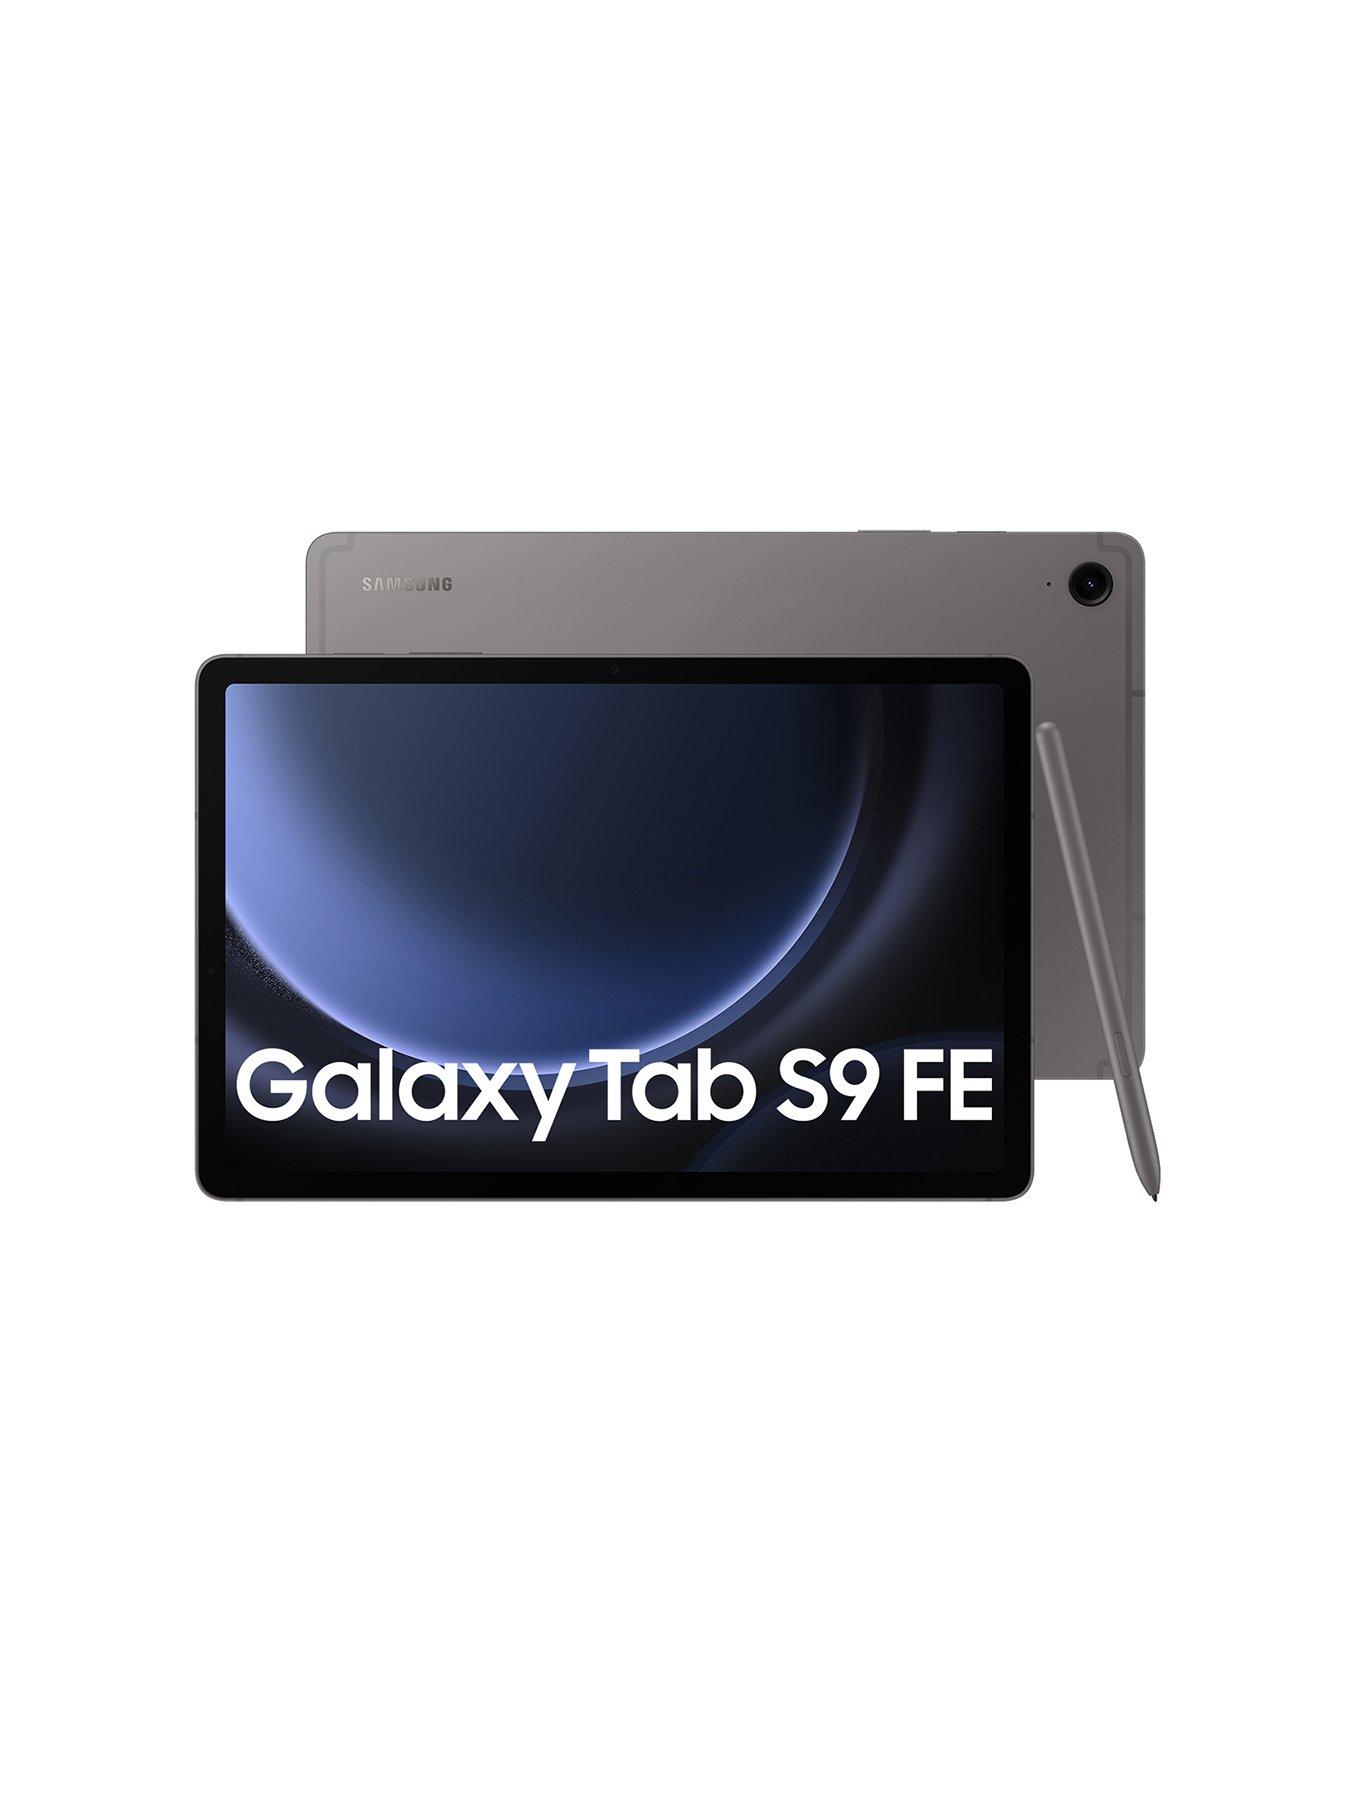 Samsung Galaxy Tab S8 Plus review: A multitasking powerhouse